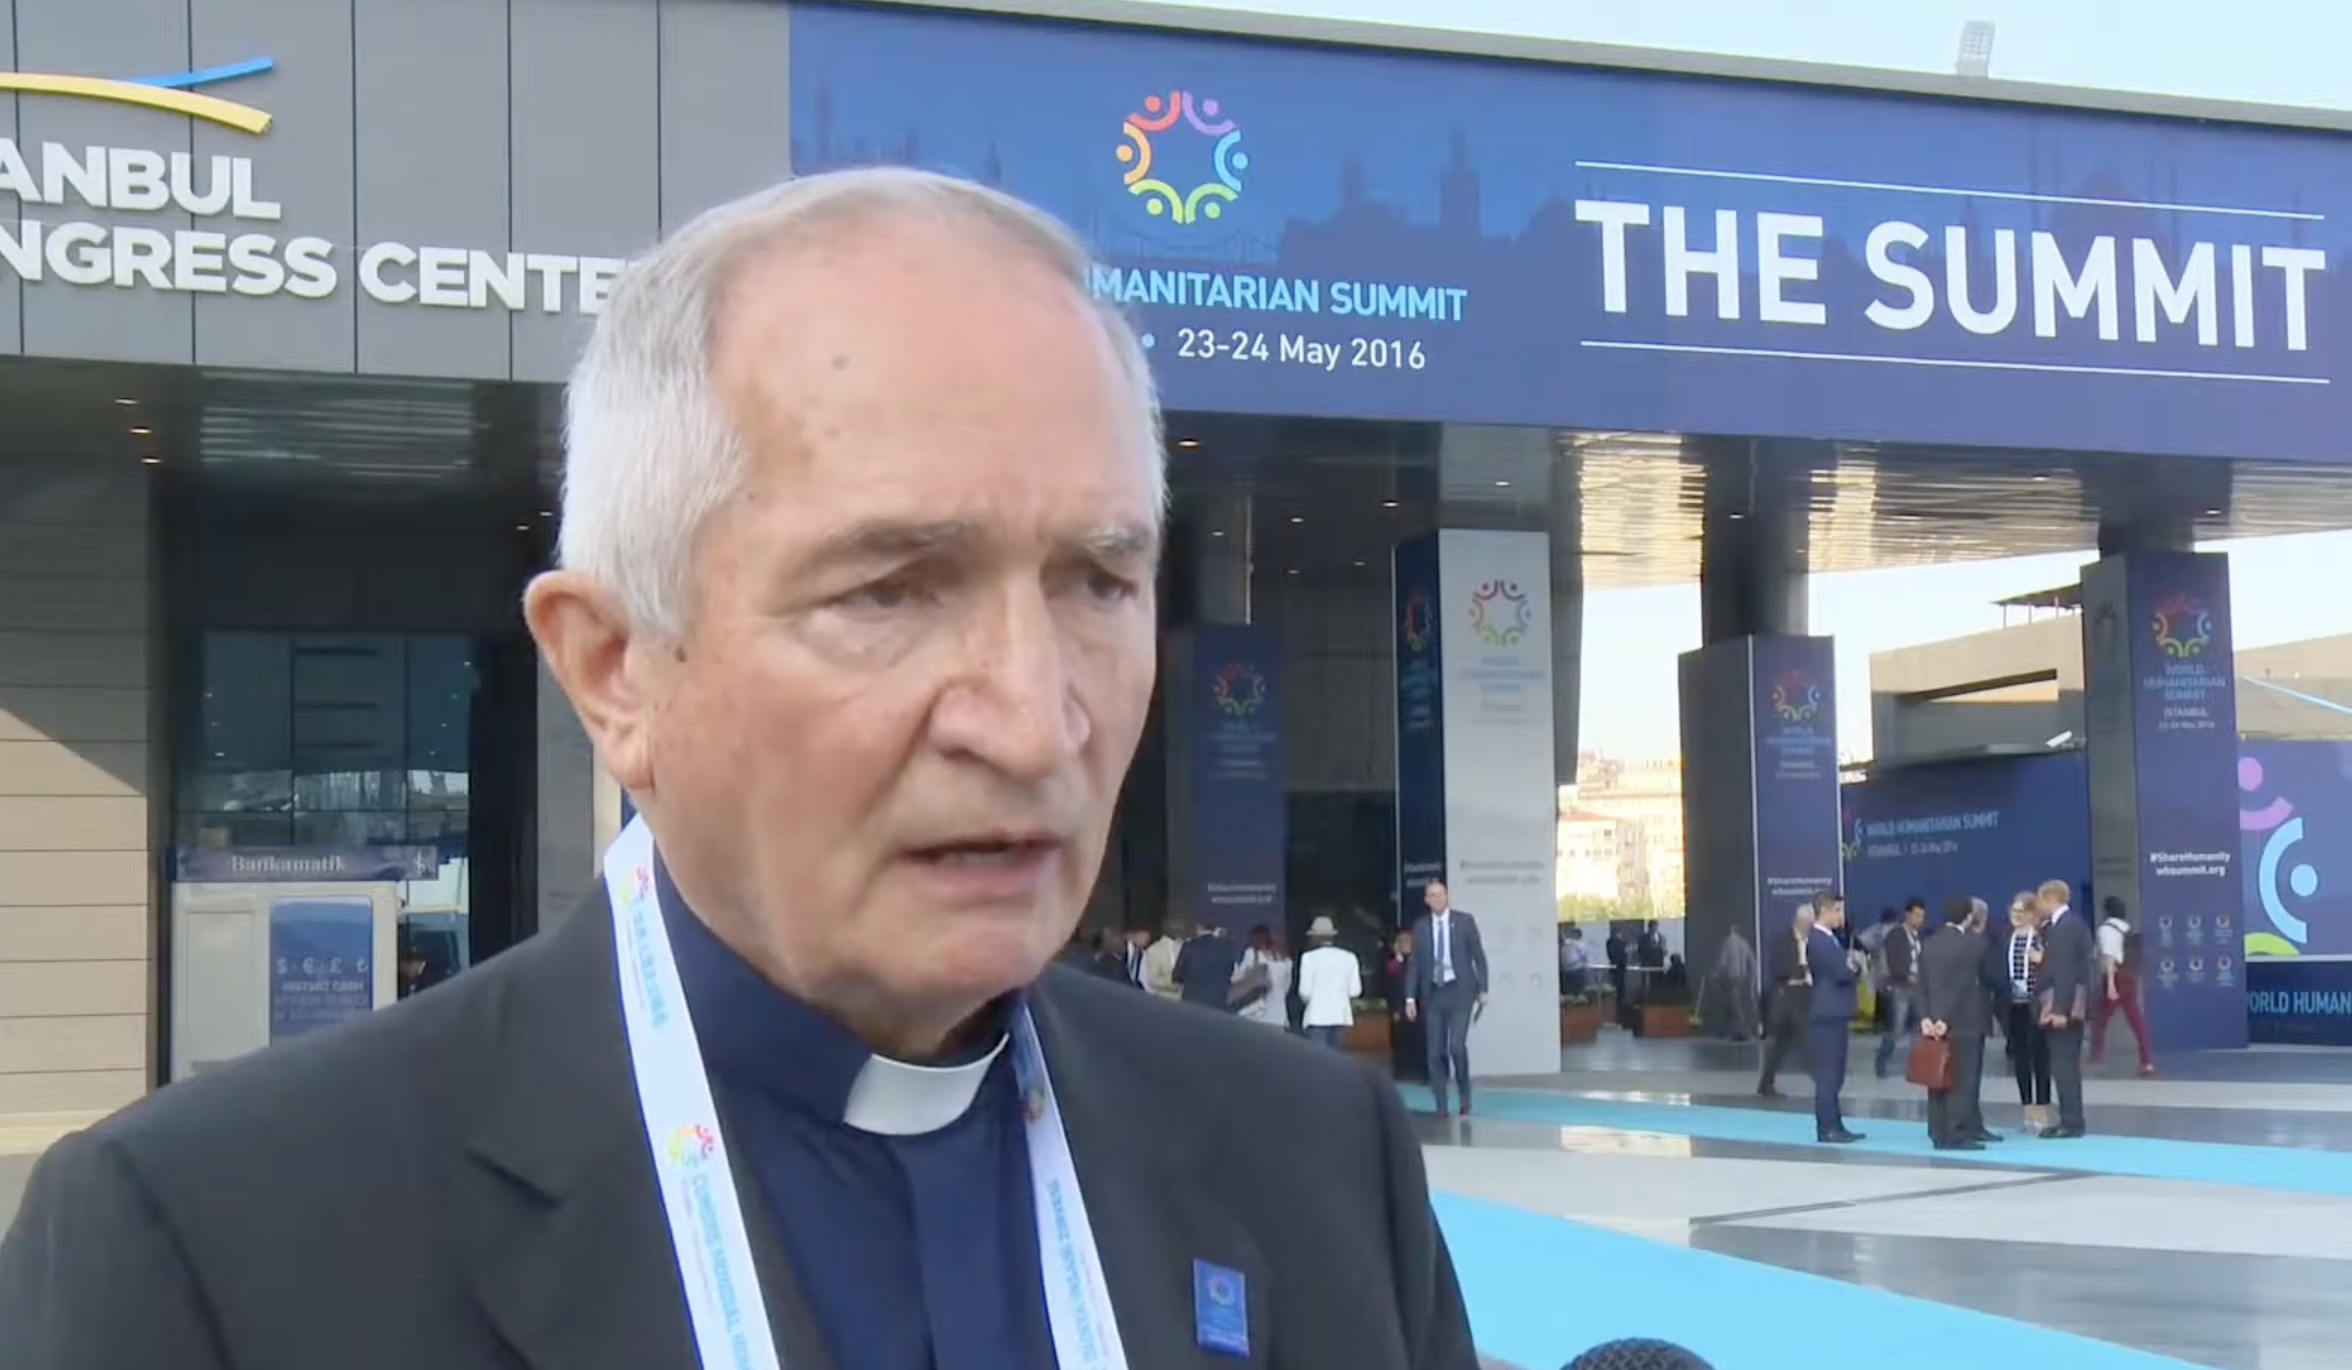 Archbishop Tomasi about Faith Based Organizations and the World Humanitarian Summit